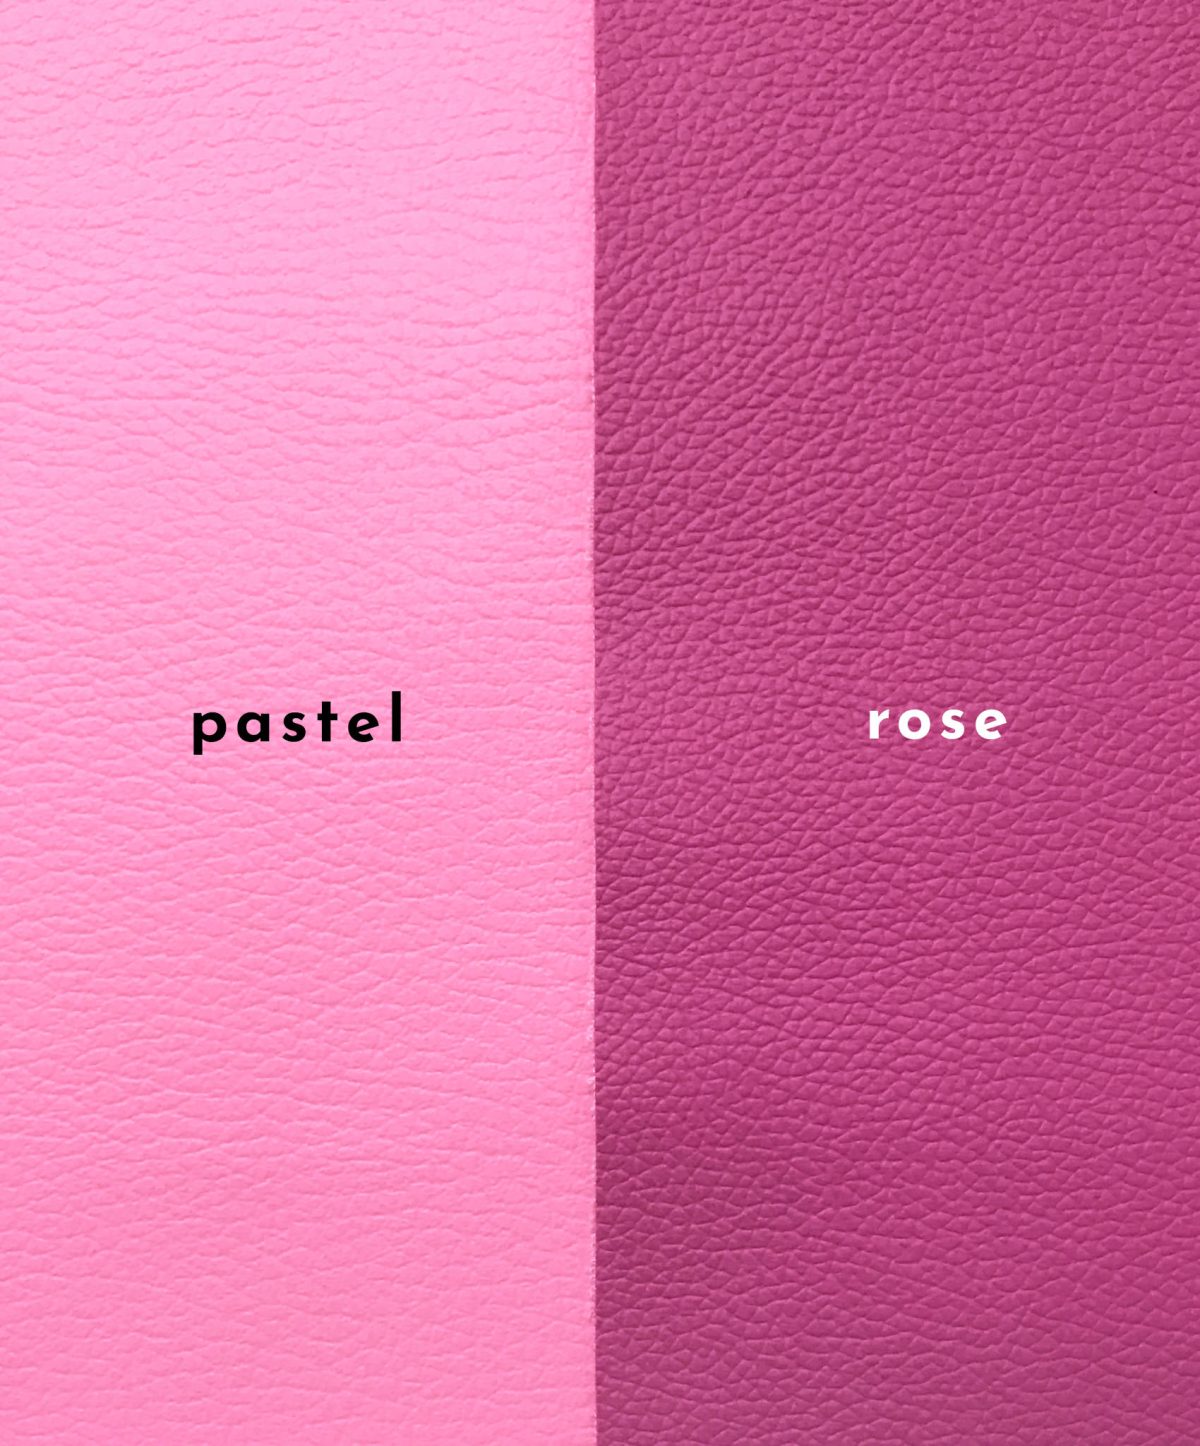 pvc leather pink pastel vs rose